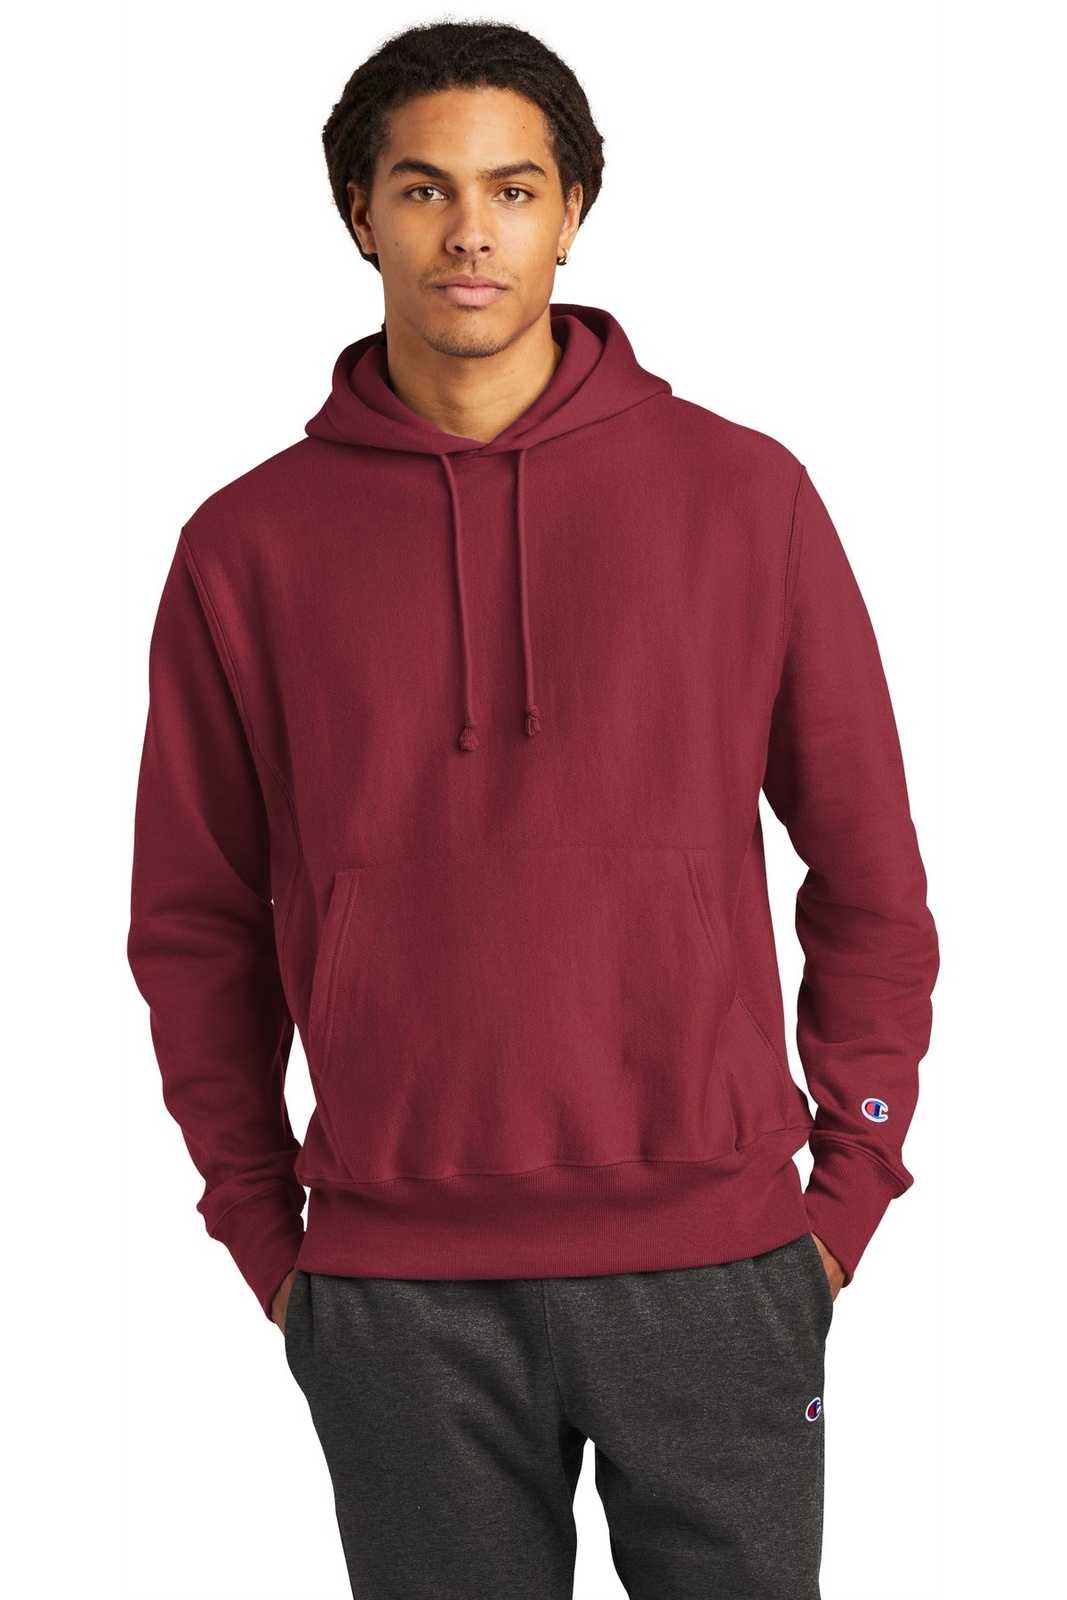 Champion S101 Reverse Weave Hooded Sweatshirt - Cardinal